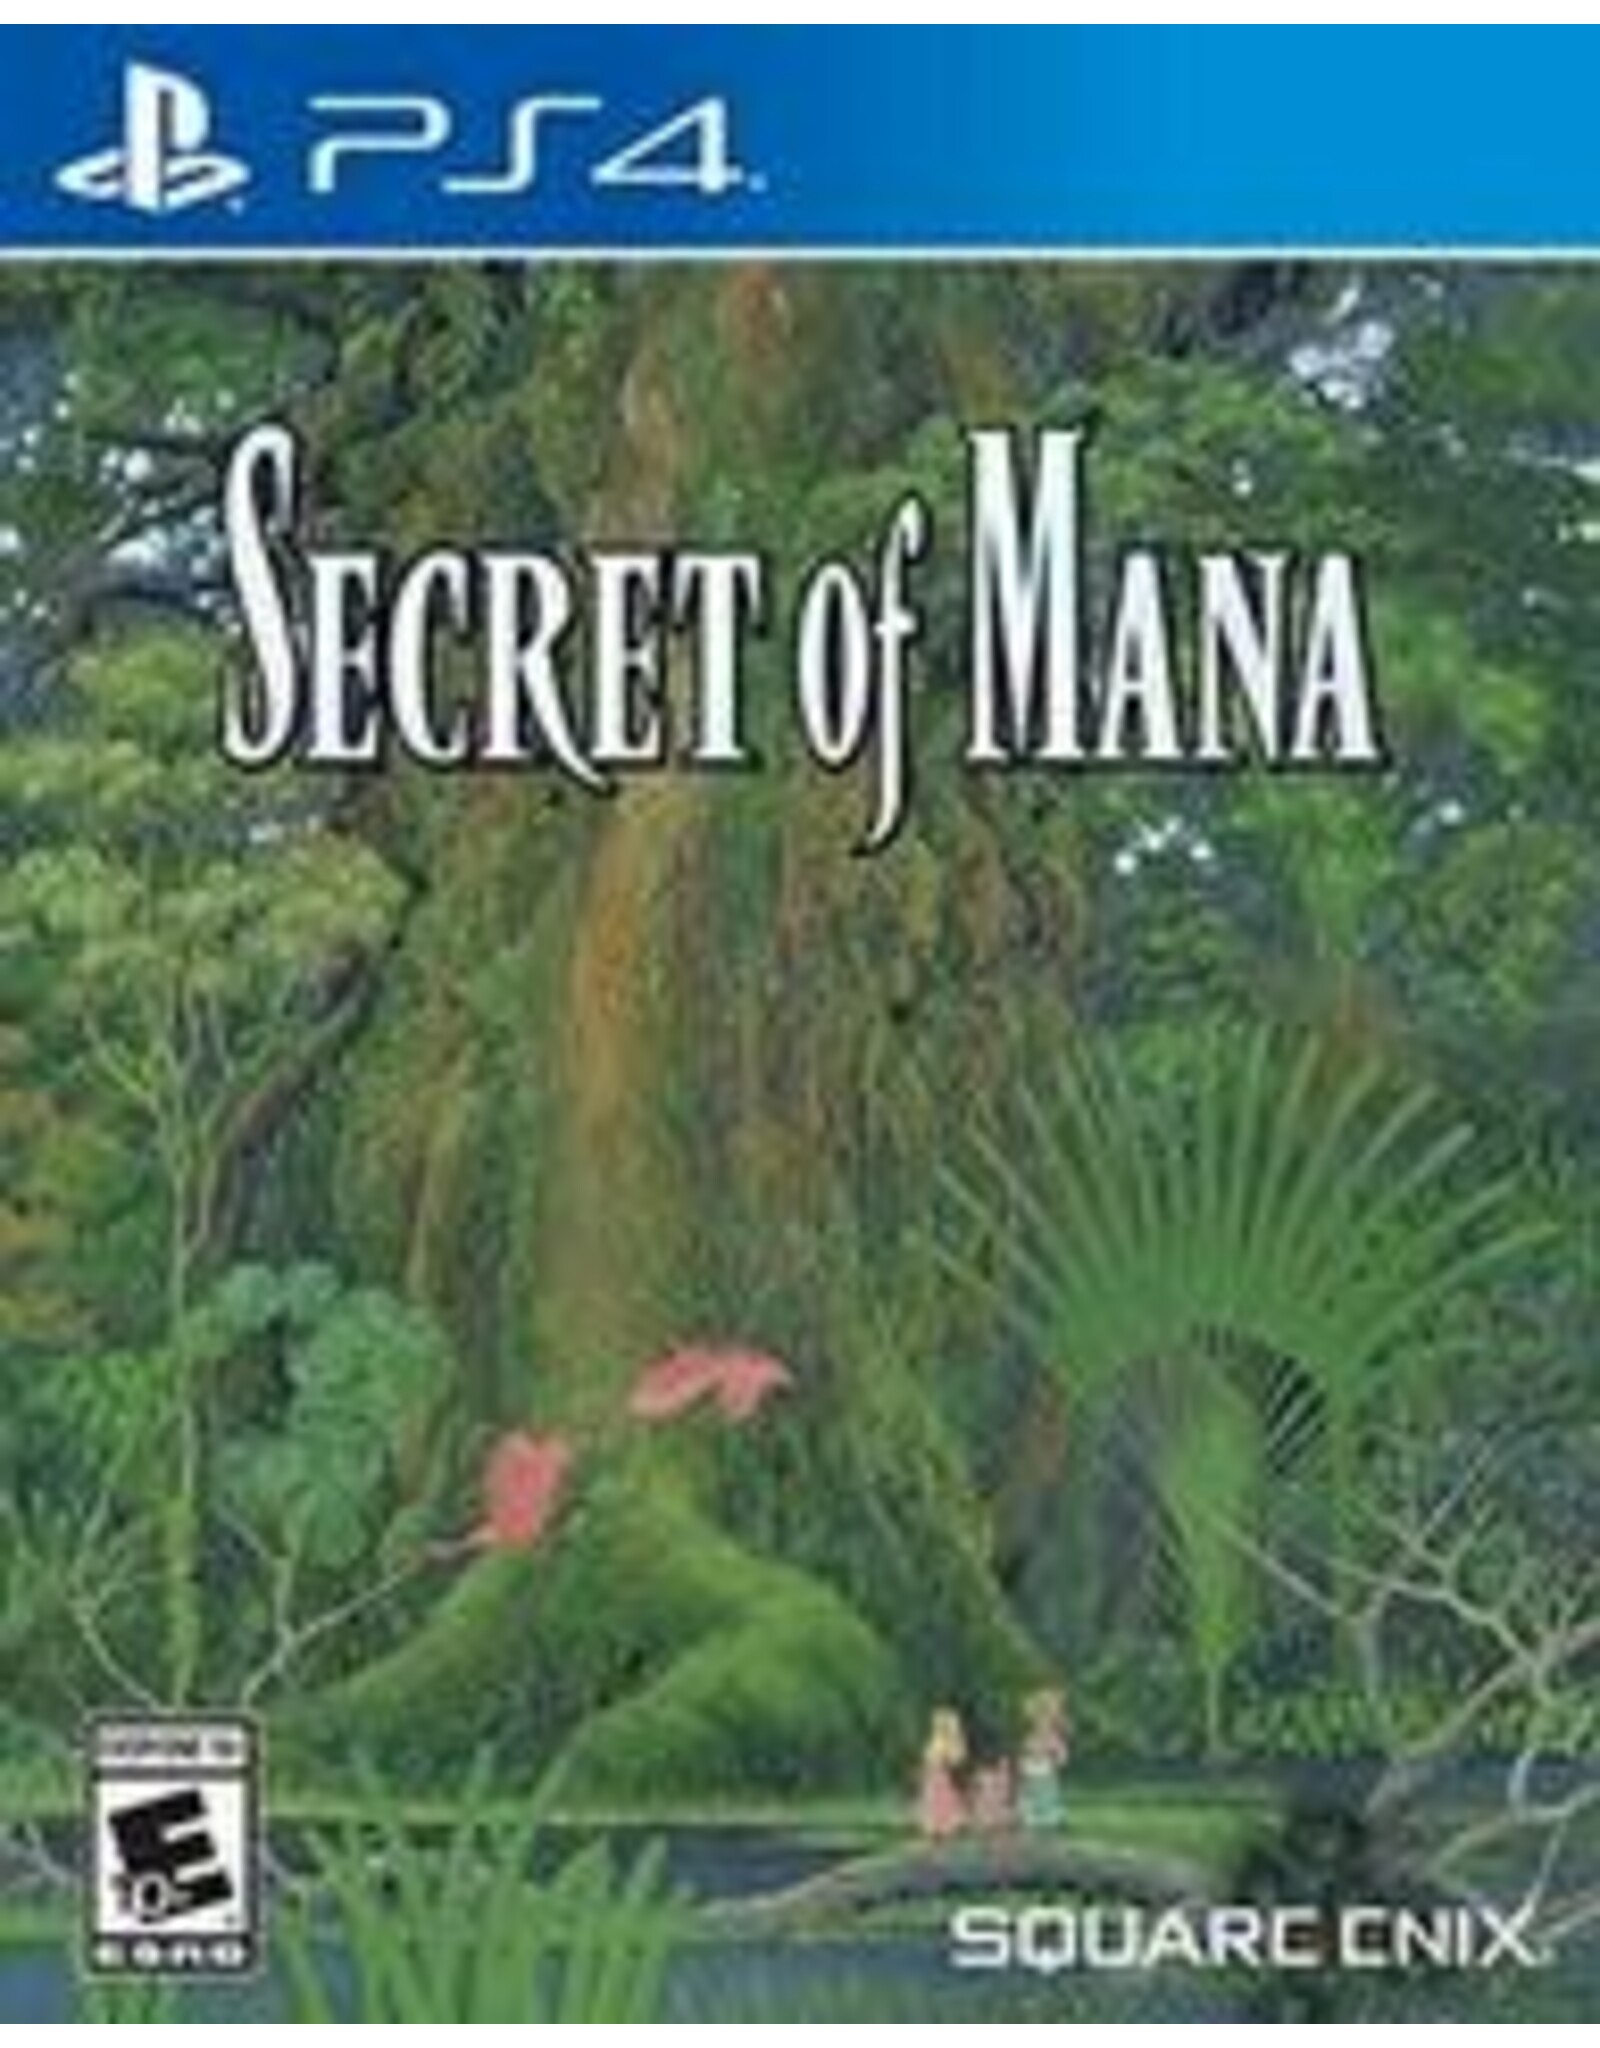 Playstation 4 Secret of Mana